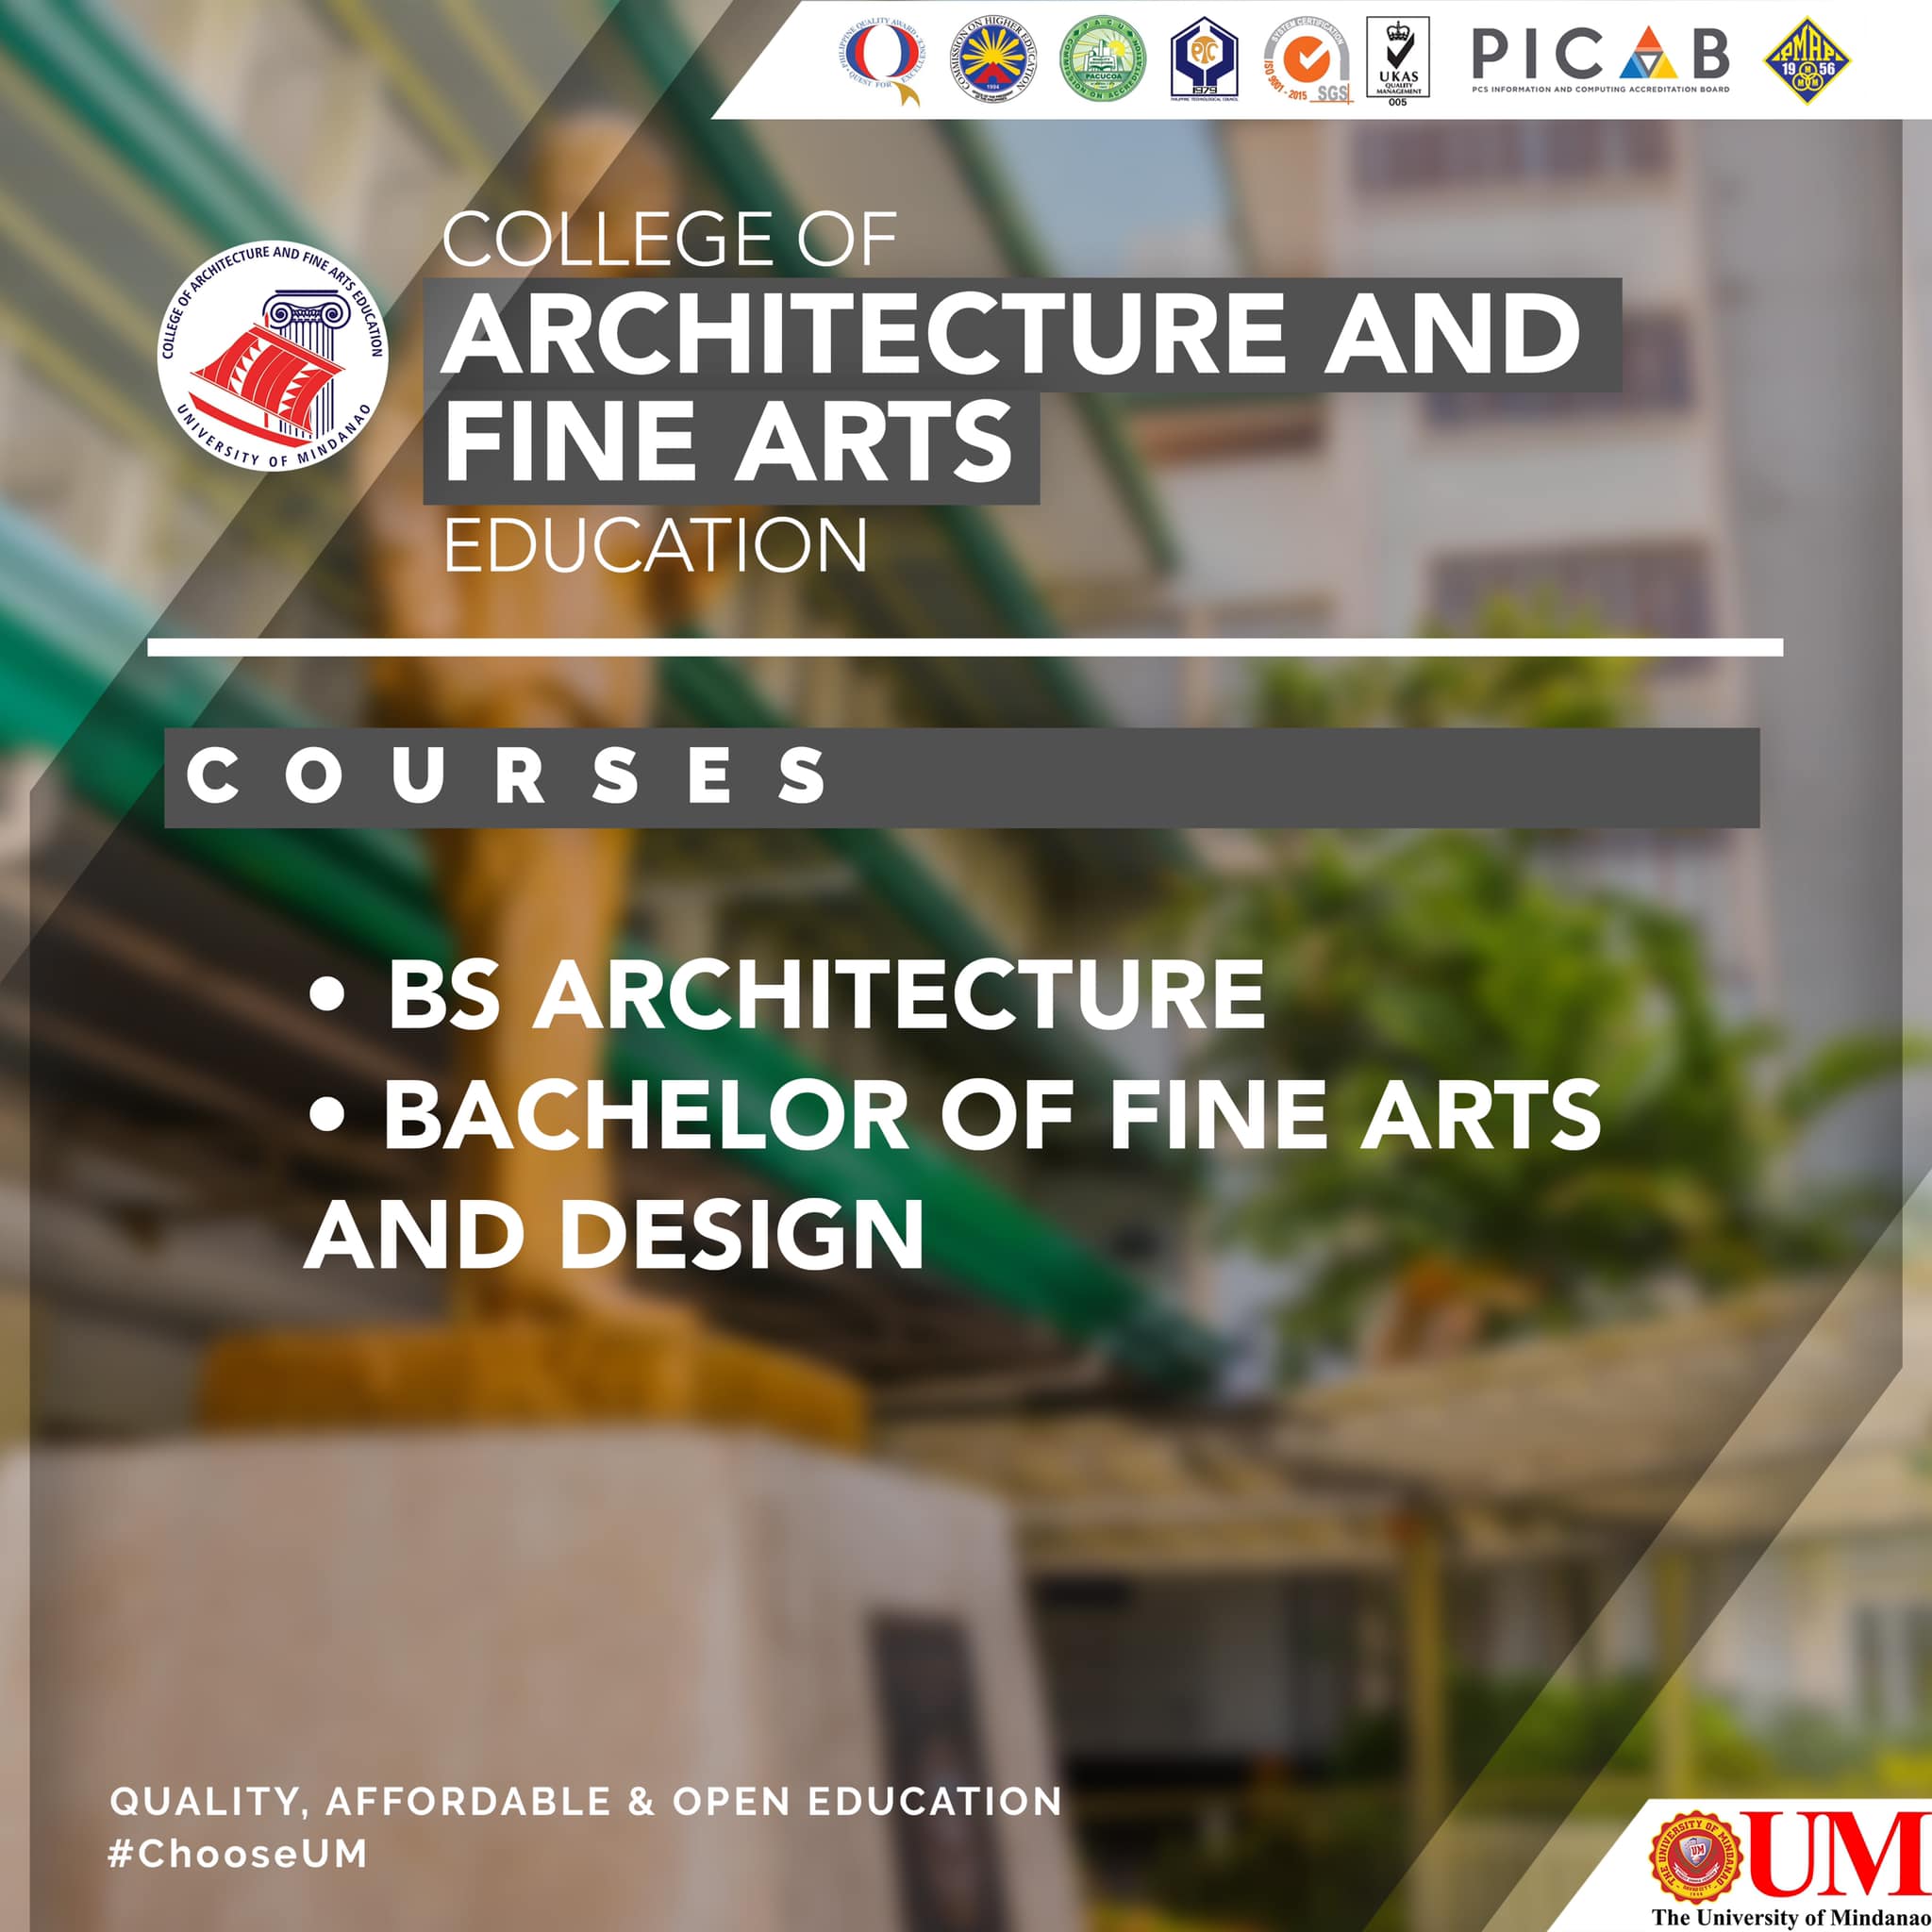 In focus: UM's College of Architecture and Fine Arts Education